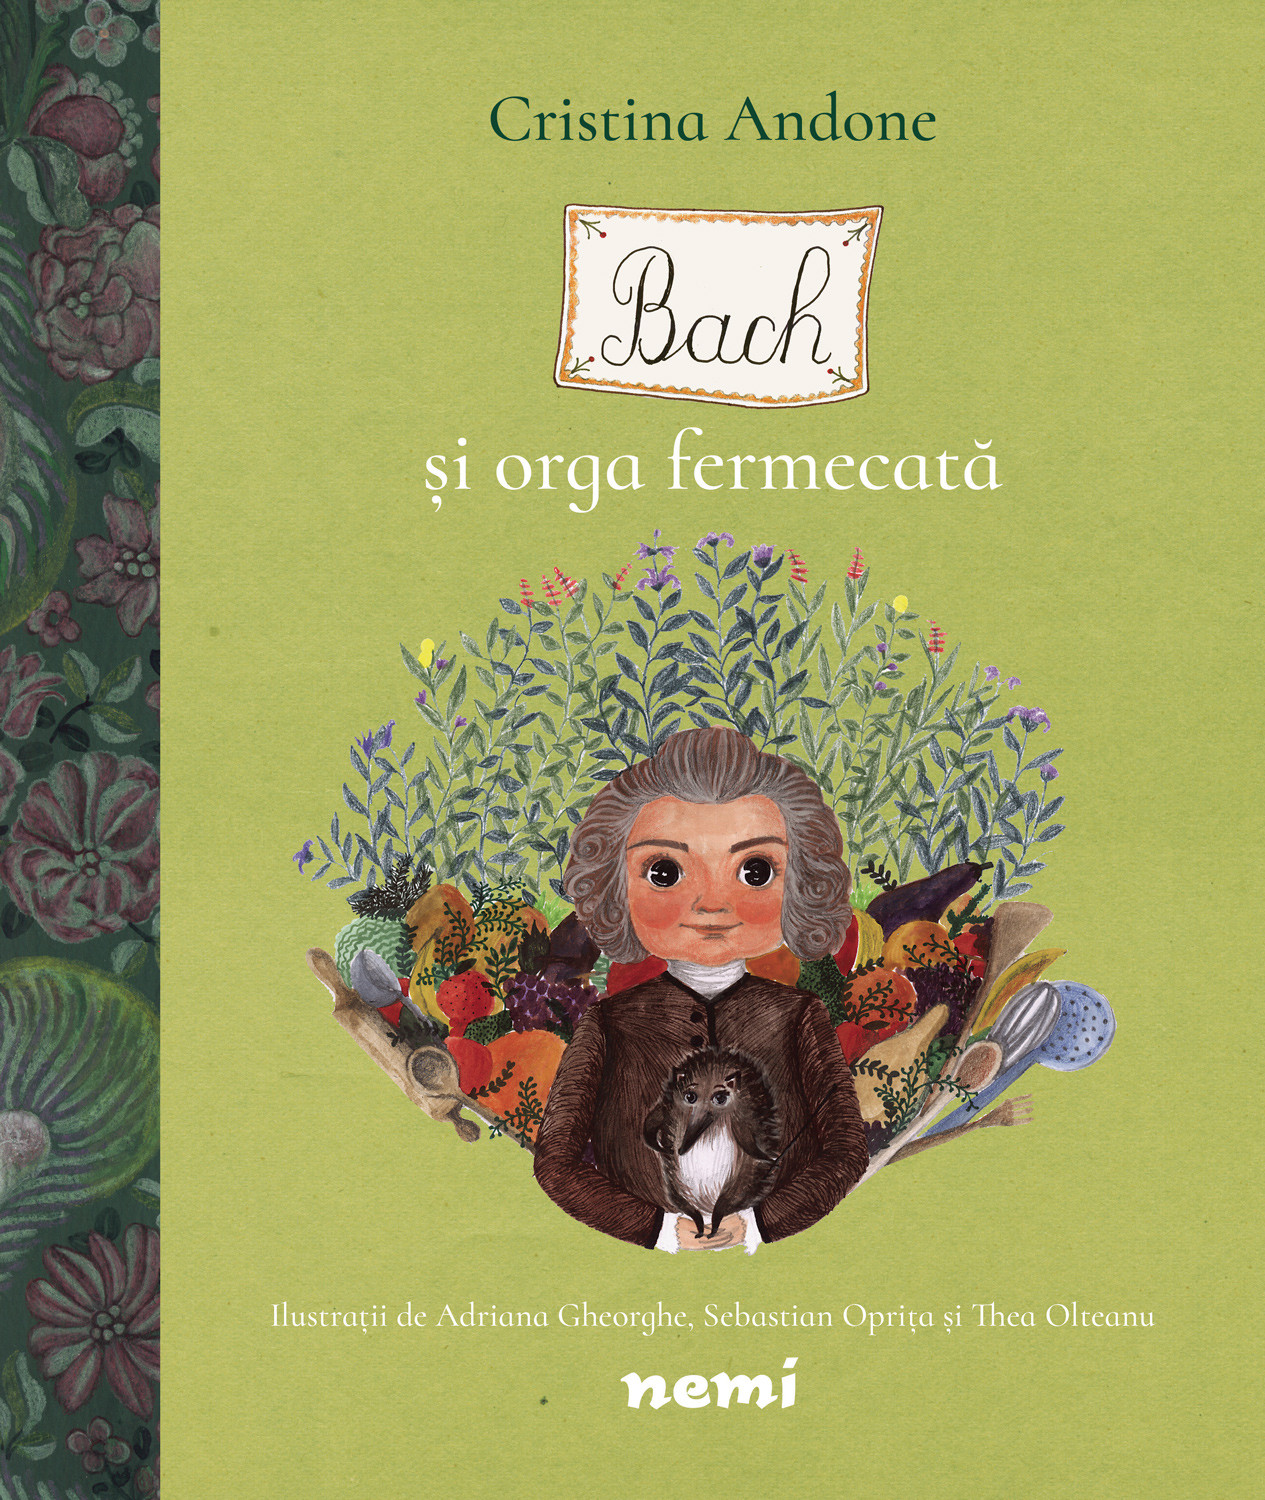 Coperta cărții: Bach si orga fermecata - lonnieyoungblood.com